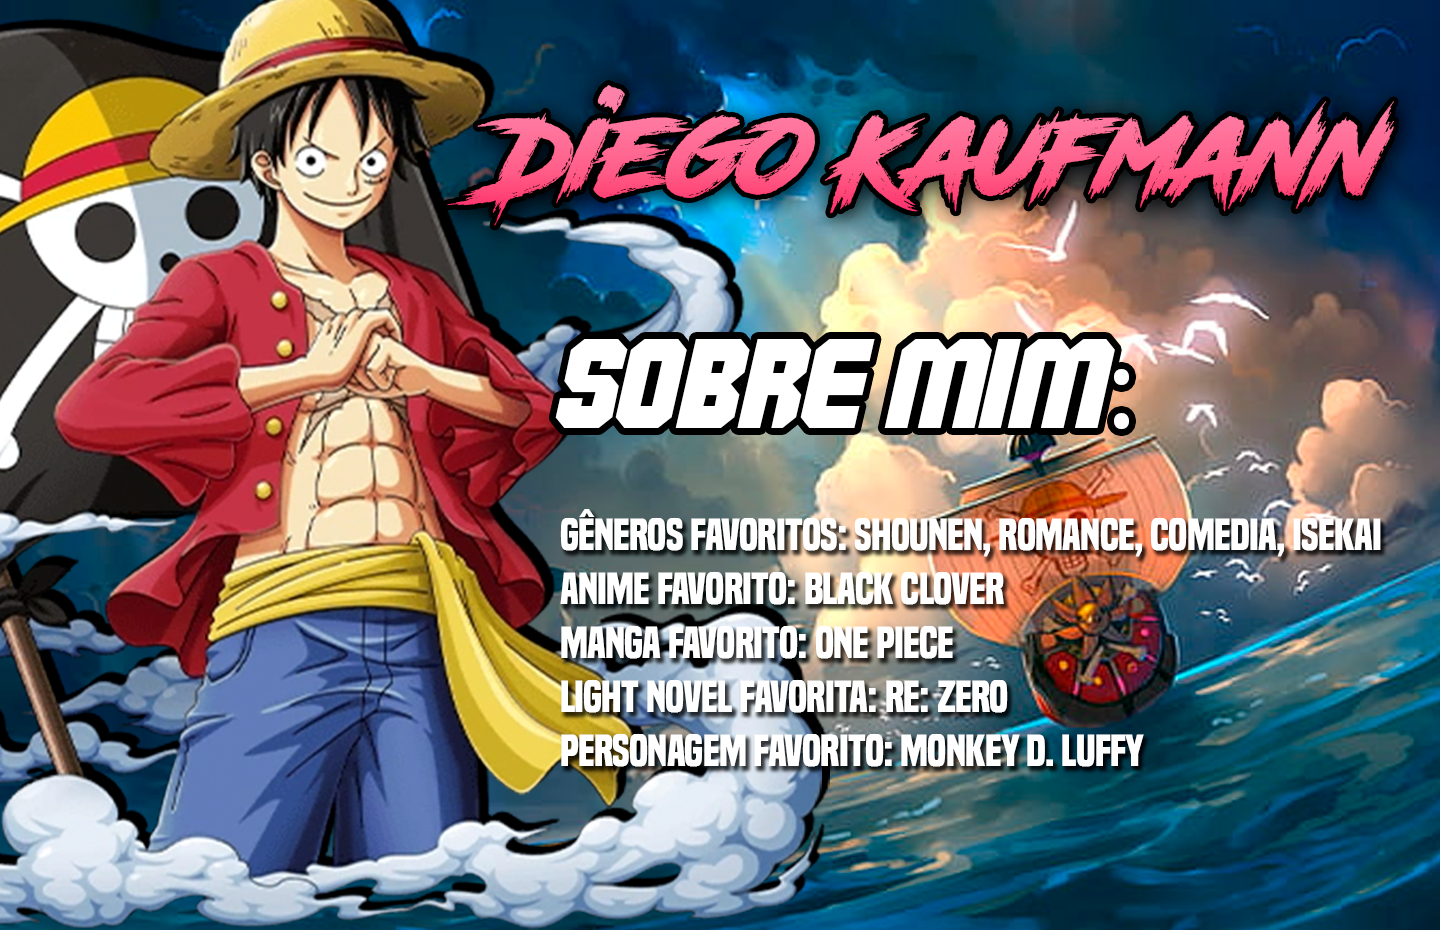 Kaufmann_Diego's Profile 